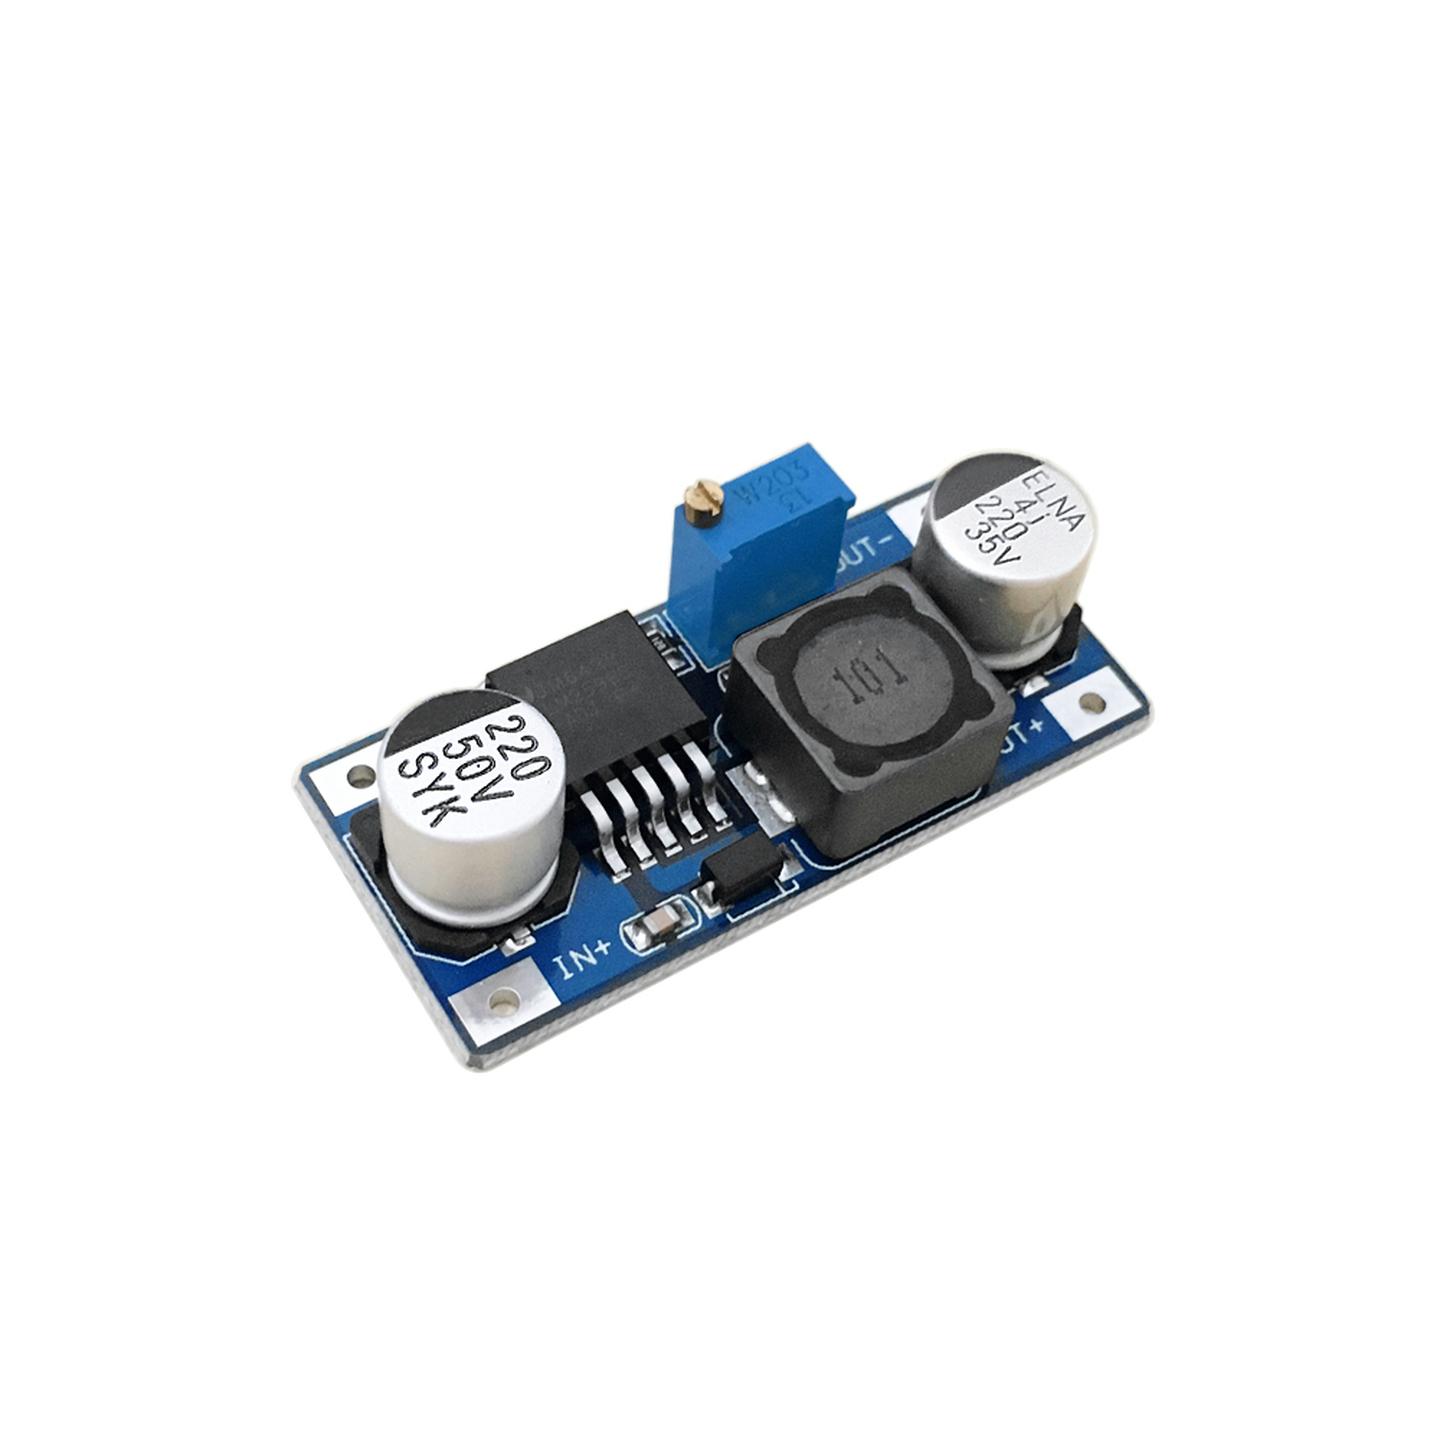 Arduino Compatible DC Voltage Regulator Module